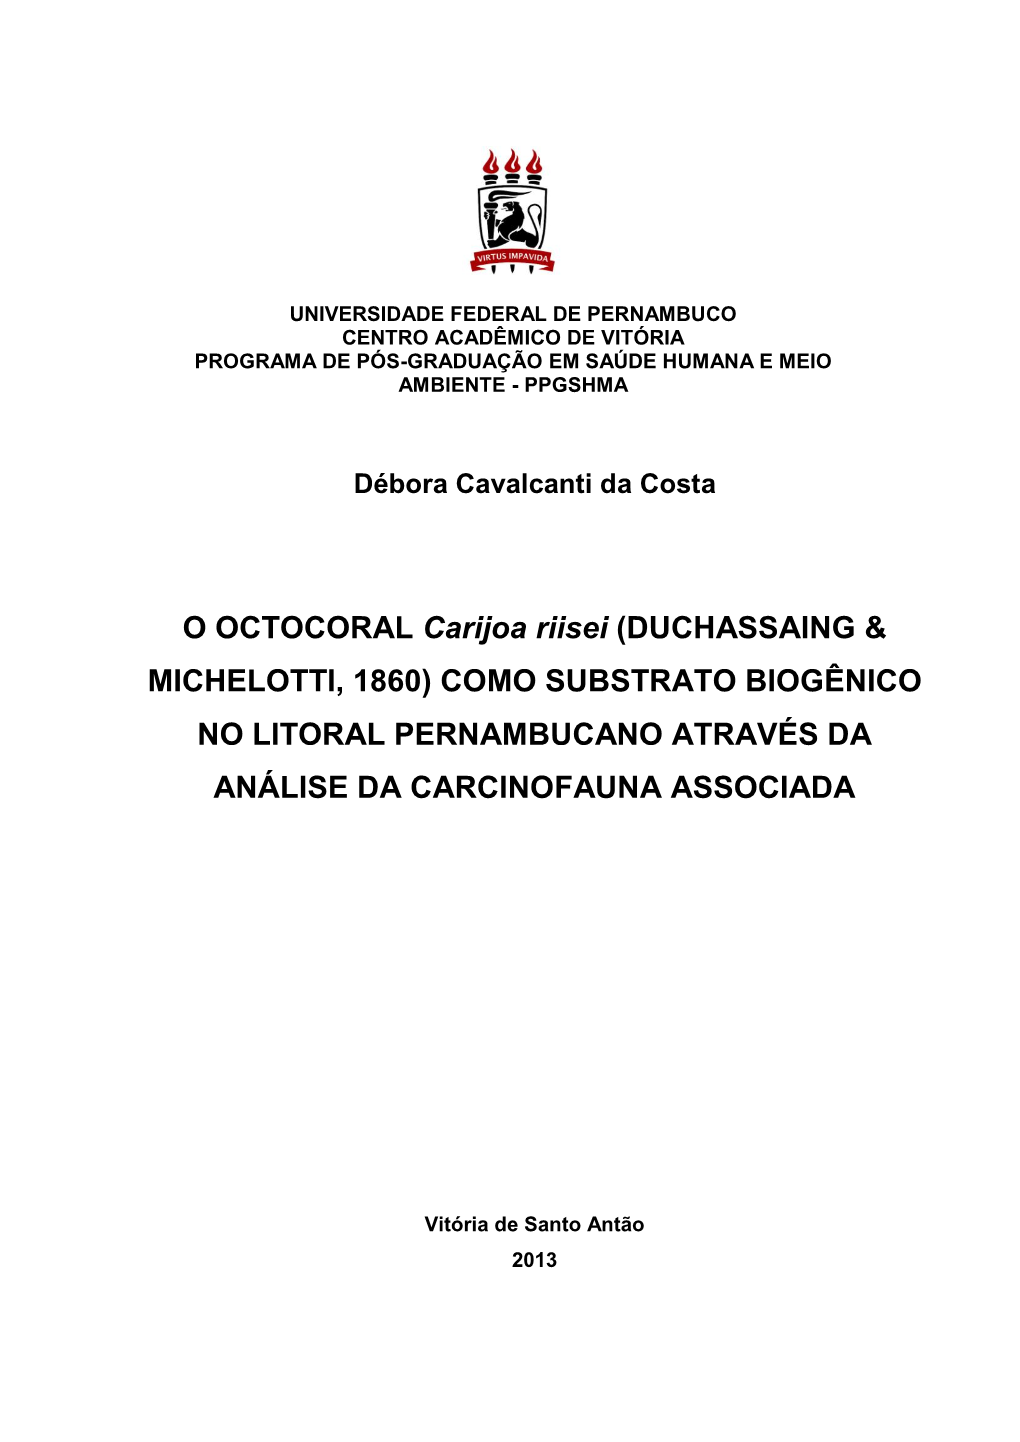 O OCTOCORAL Carijoa Riisei (DUCHASSAING & MICHELOTTI, 1860) COMO SUBSTRATO BIOGÊNICO NO LITORAL PERNAMBUCANO ATRAVÉS DA AN